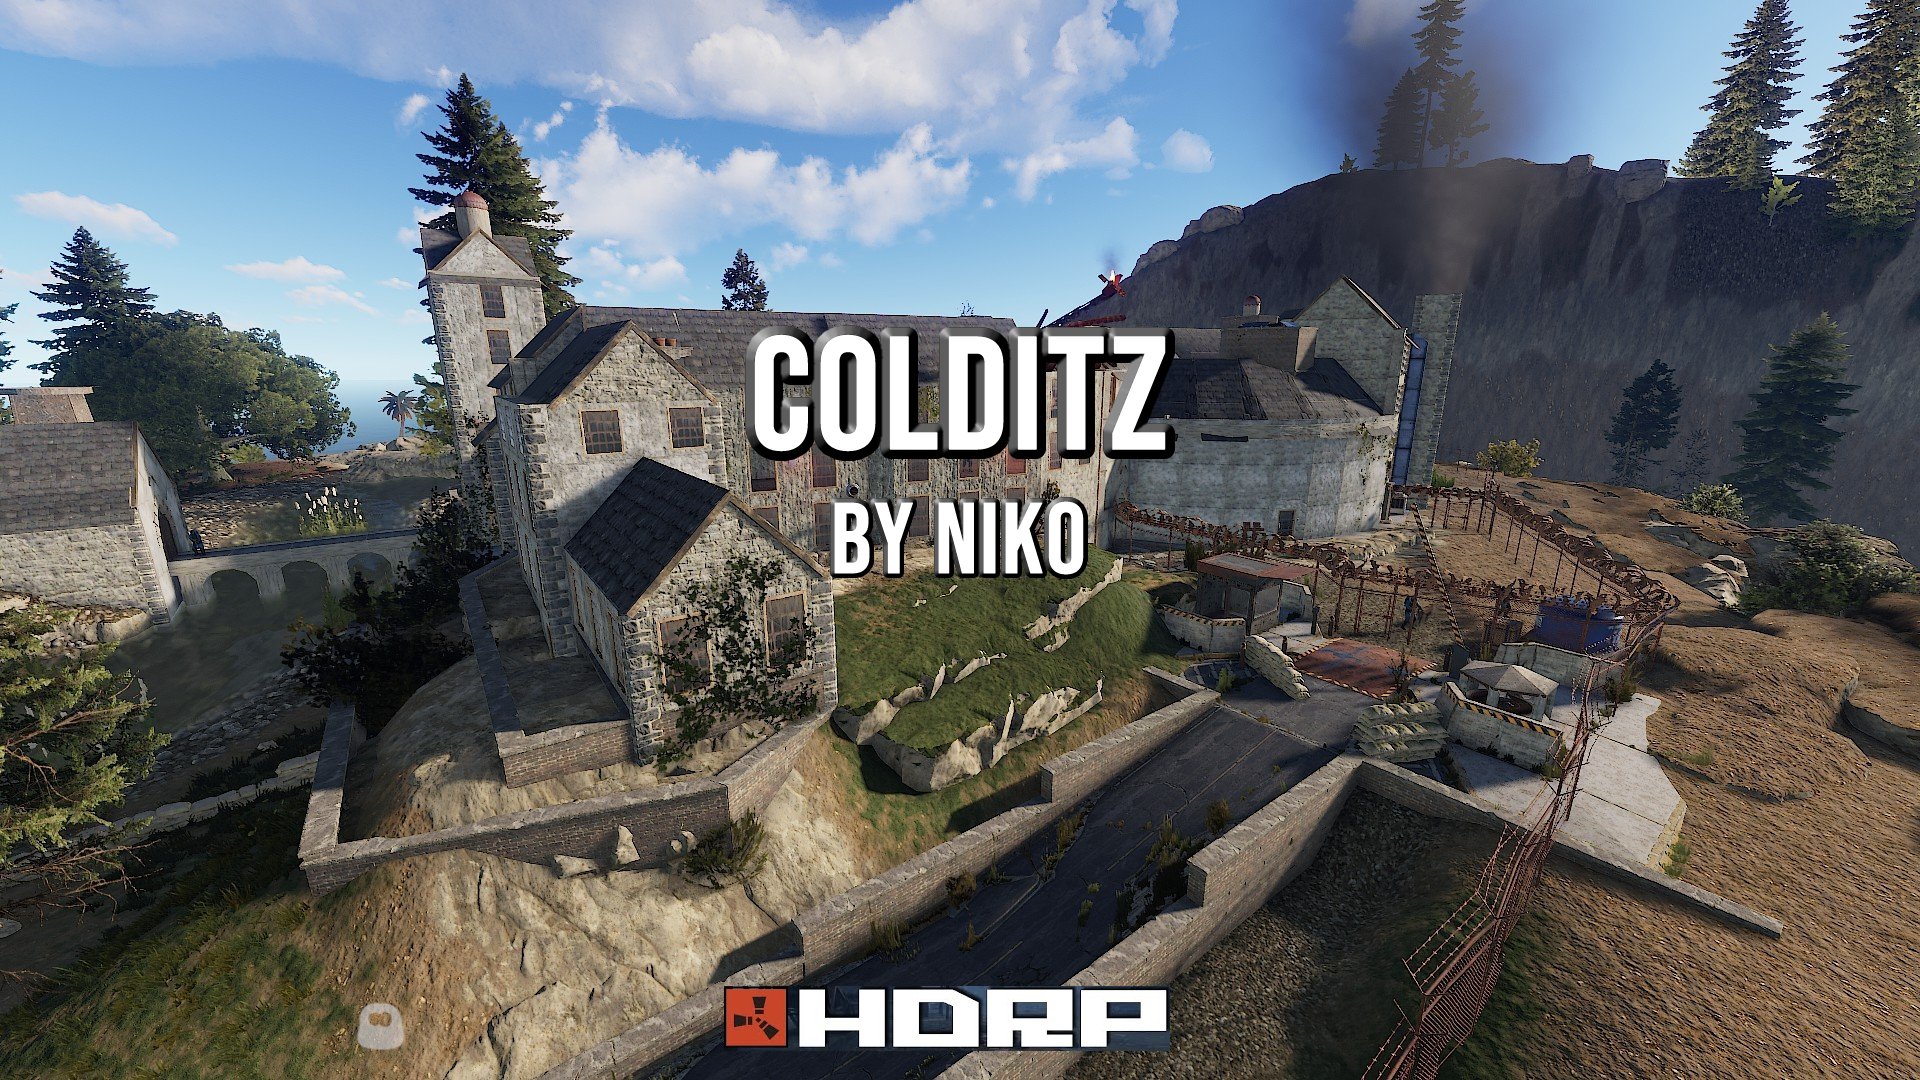 Colditz by Niko